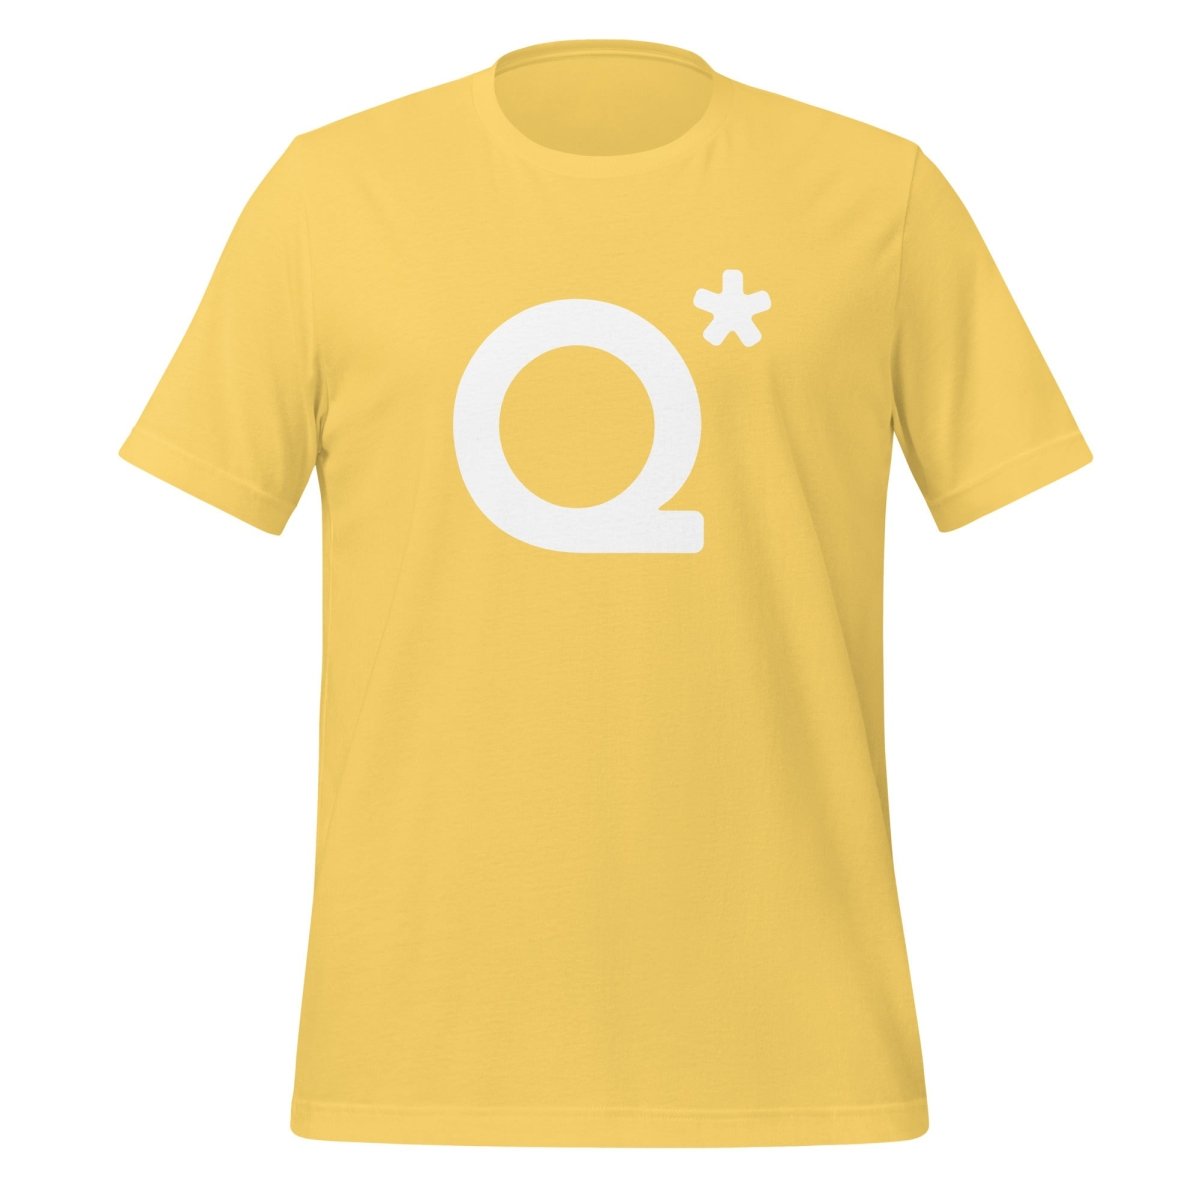 Q* (Q - Star) T - Shirt 1 (unisex) - Yellow - AI Store